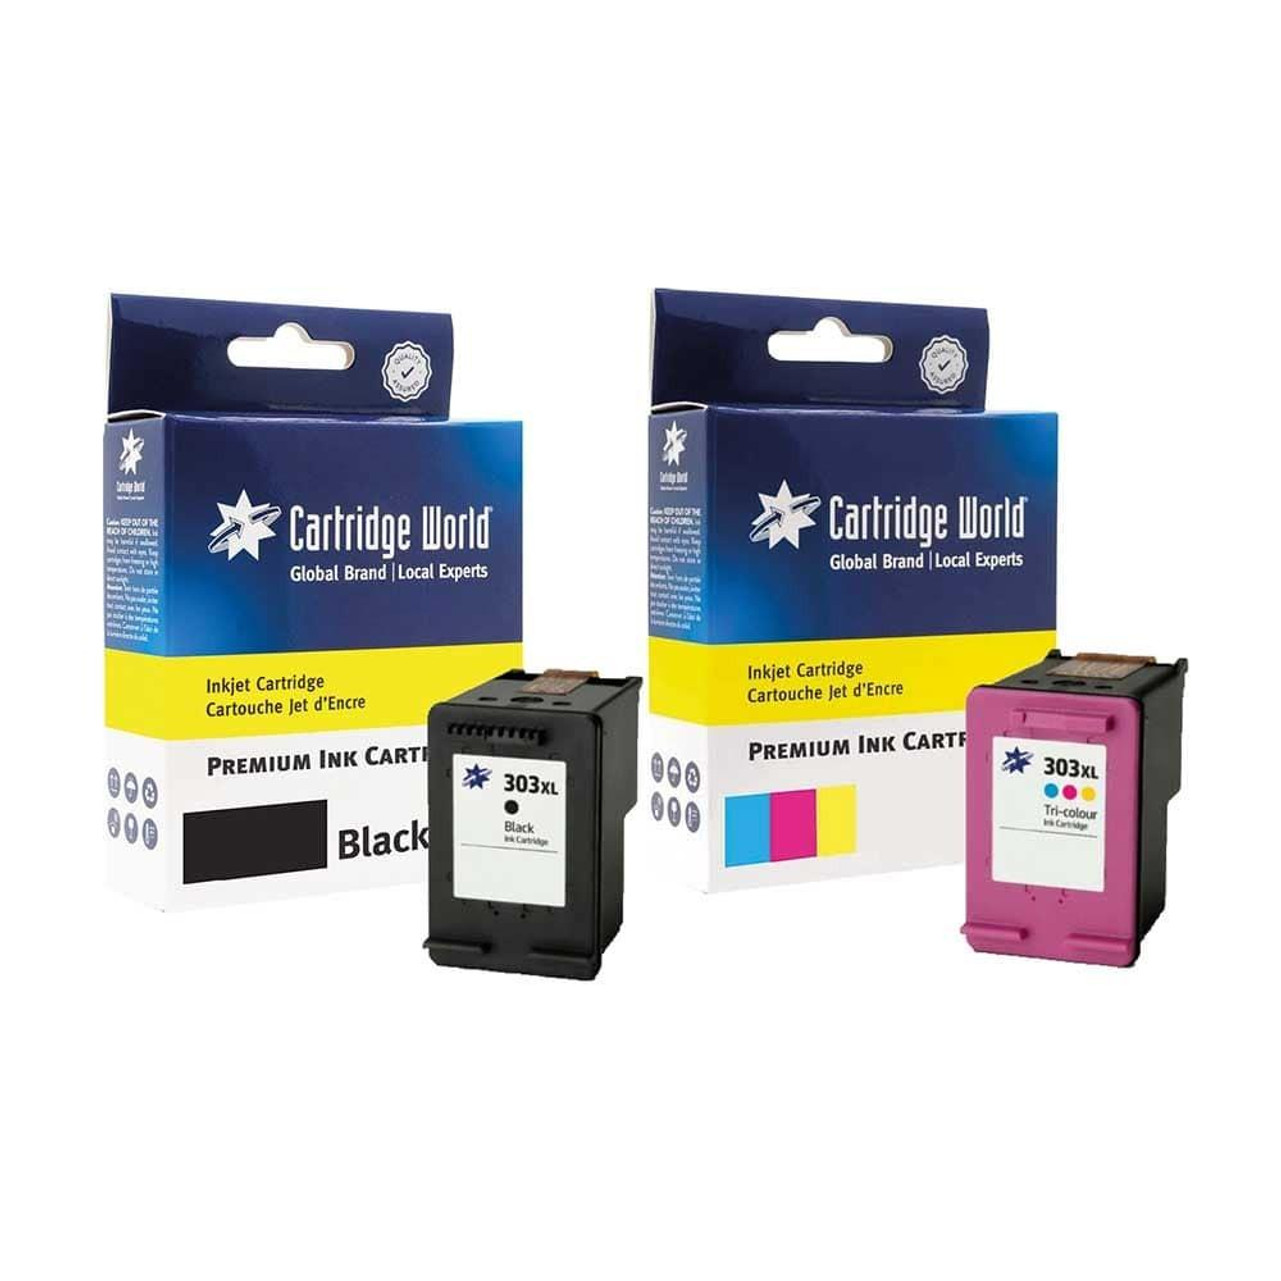 HP High Capacity Multipack Black, Tri-Colour Ink Cartridges 303XL